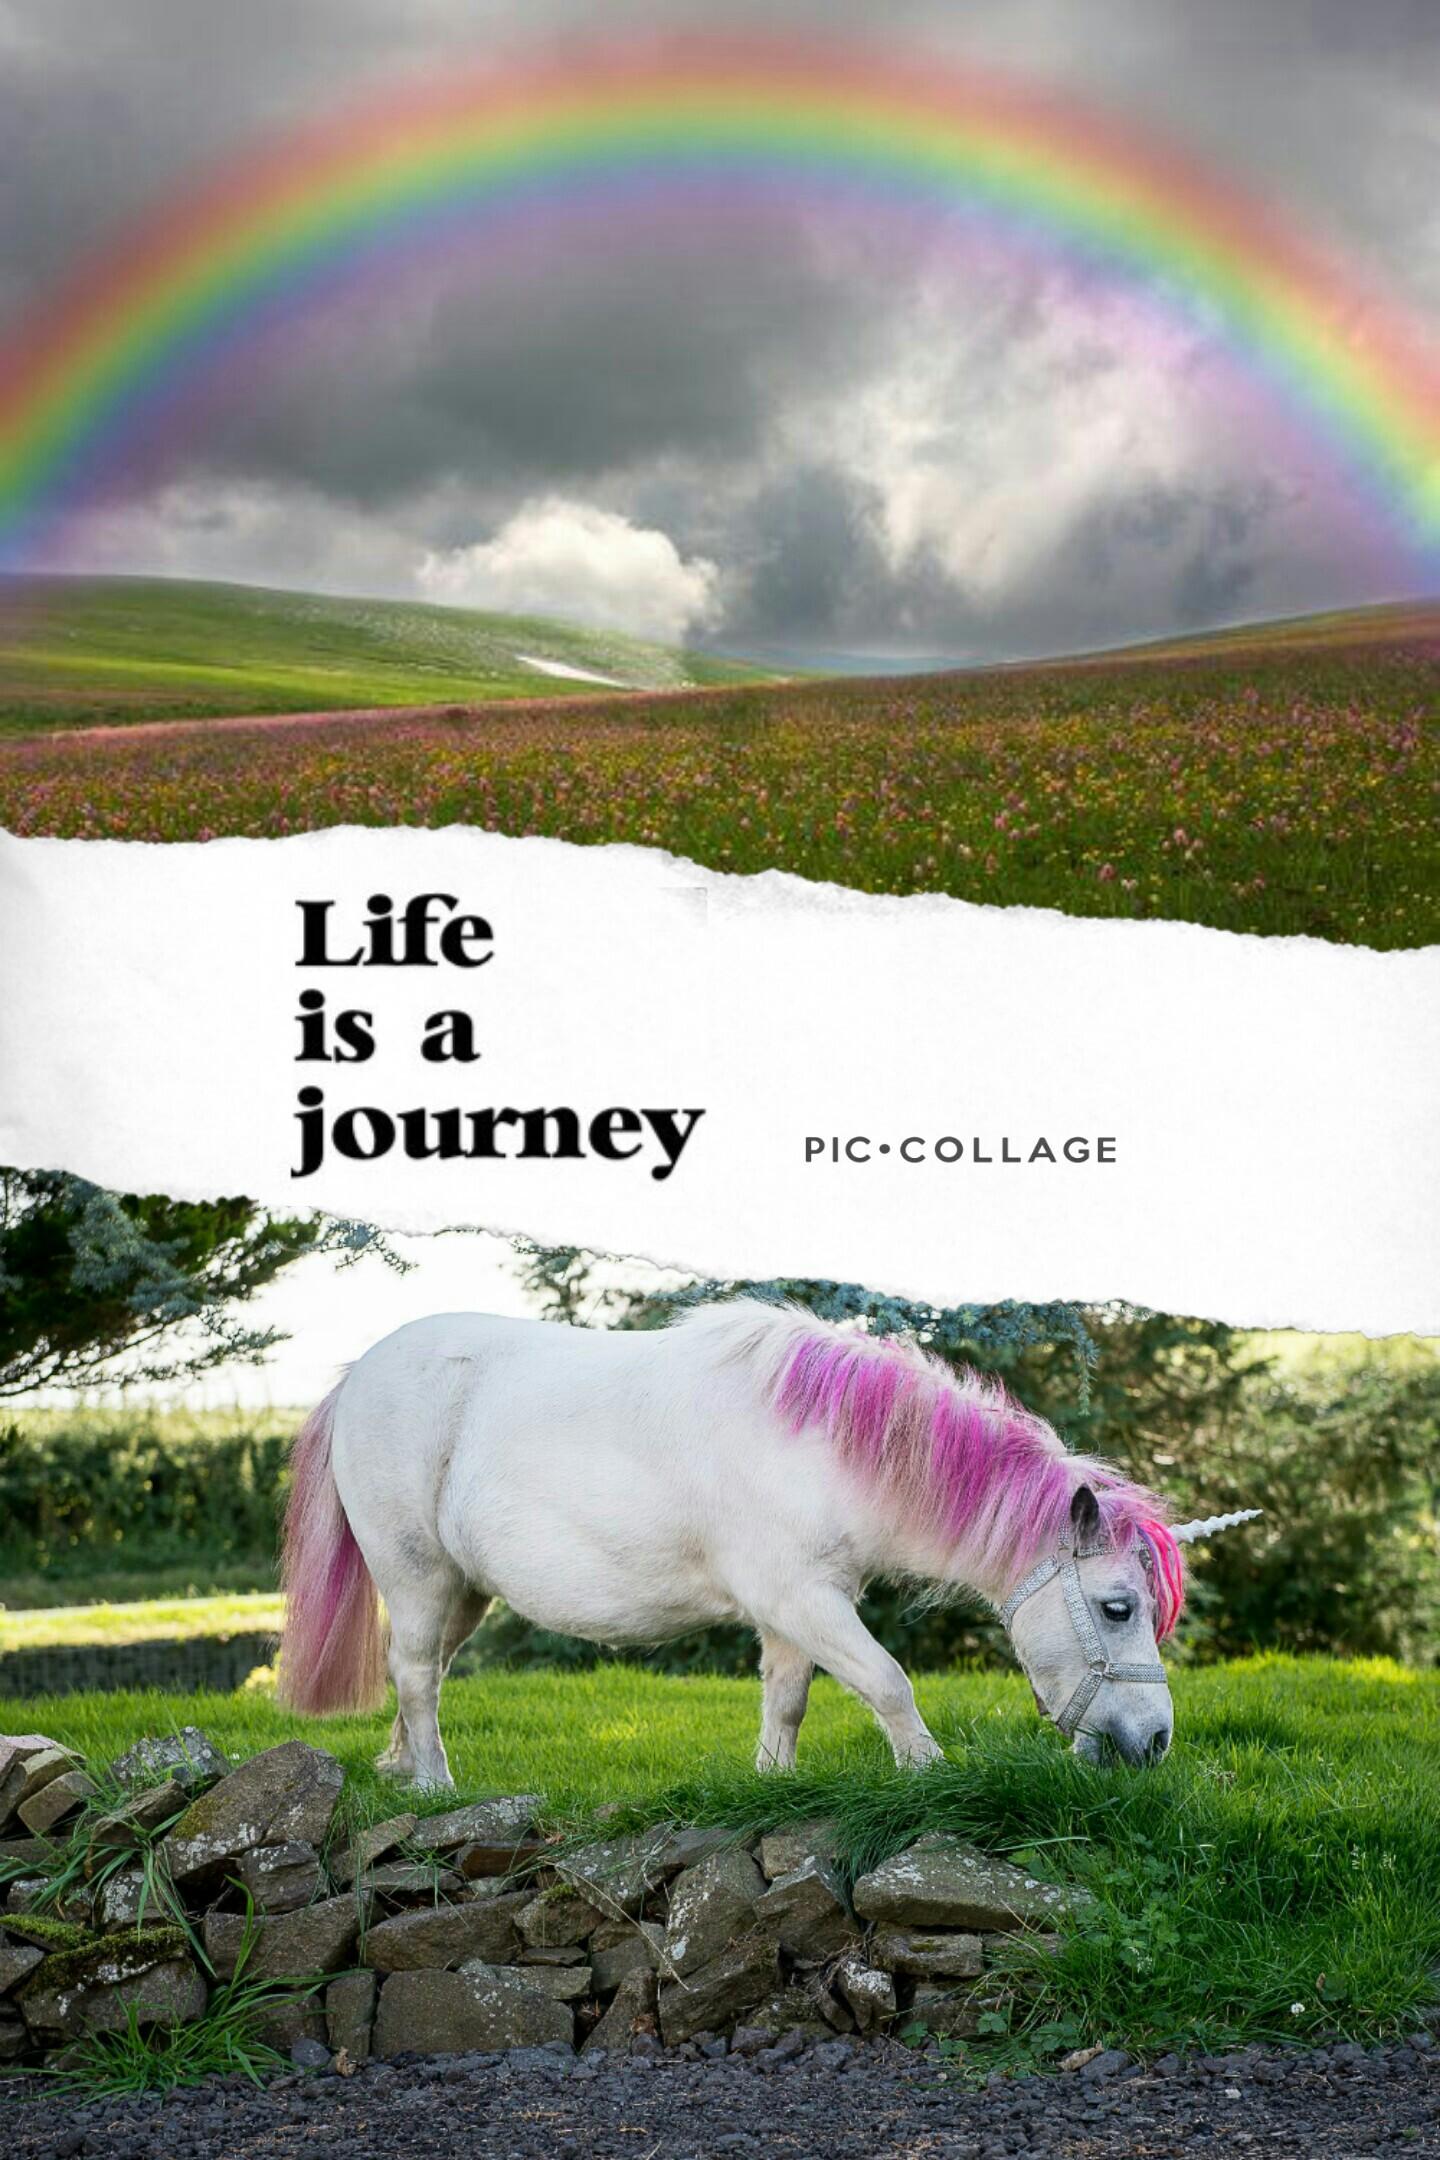 unicorns and rainbows for life 